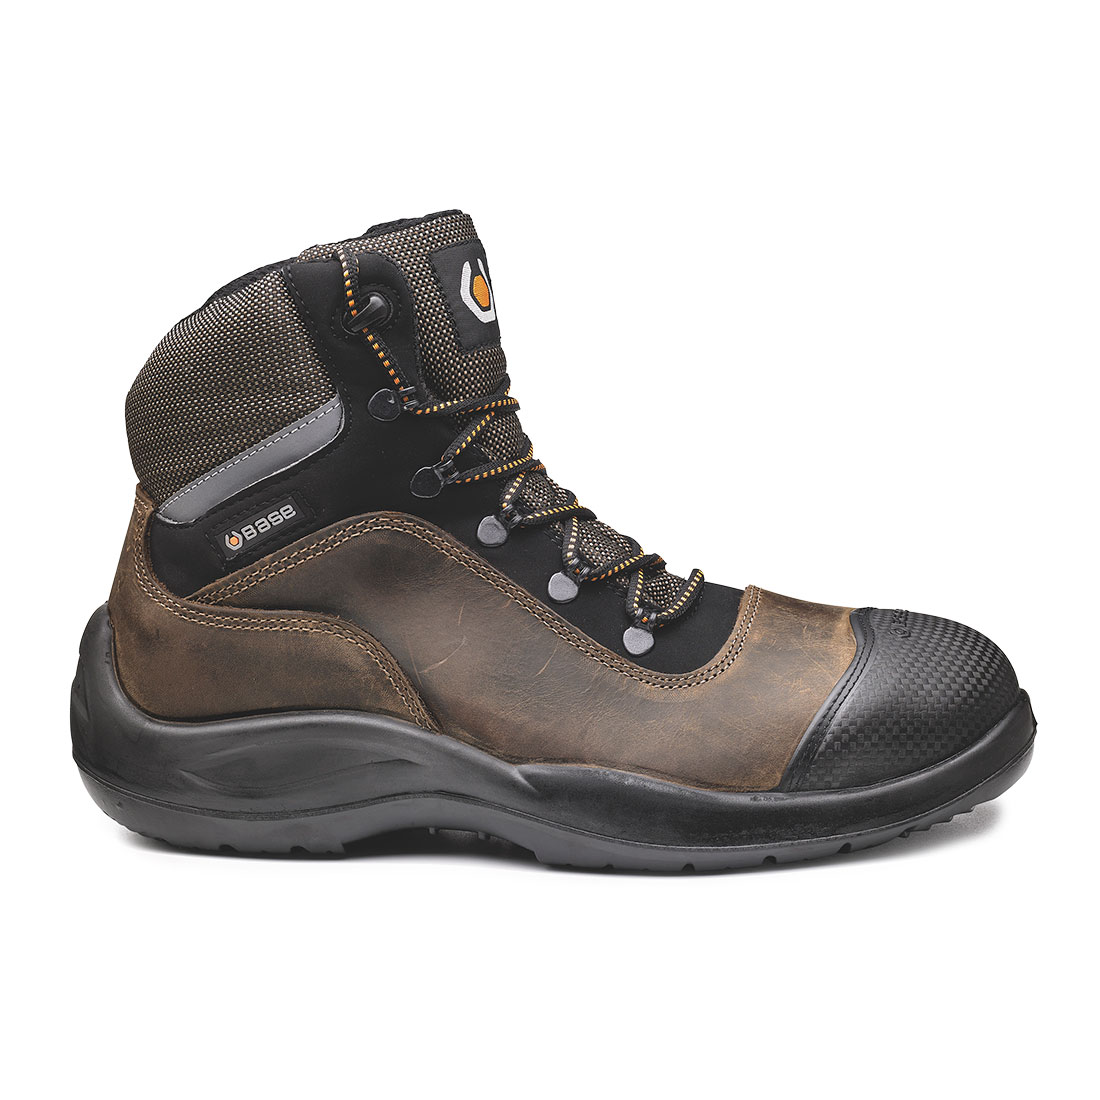 Base Raider Top Ankle Shoes Brown/Black B0416